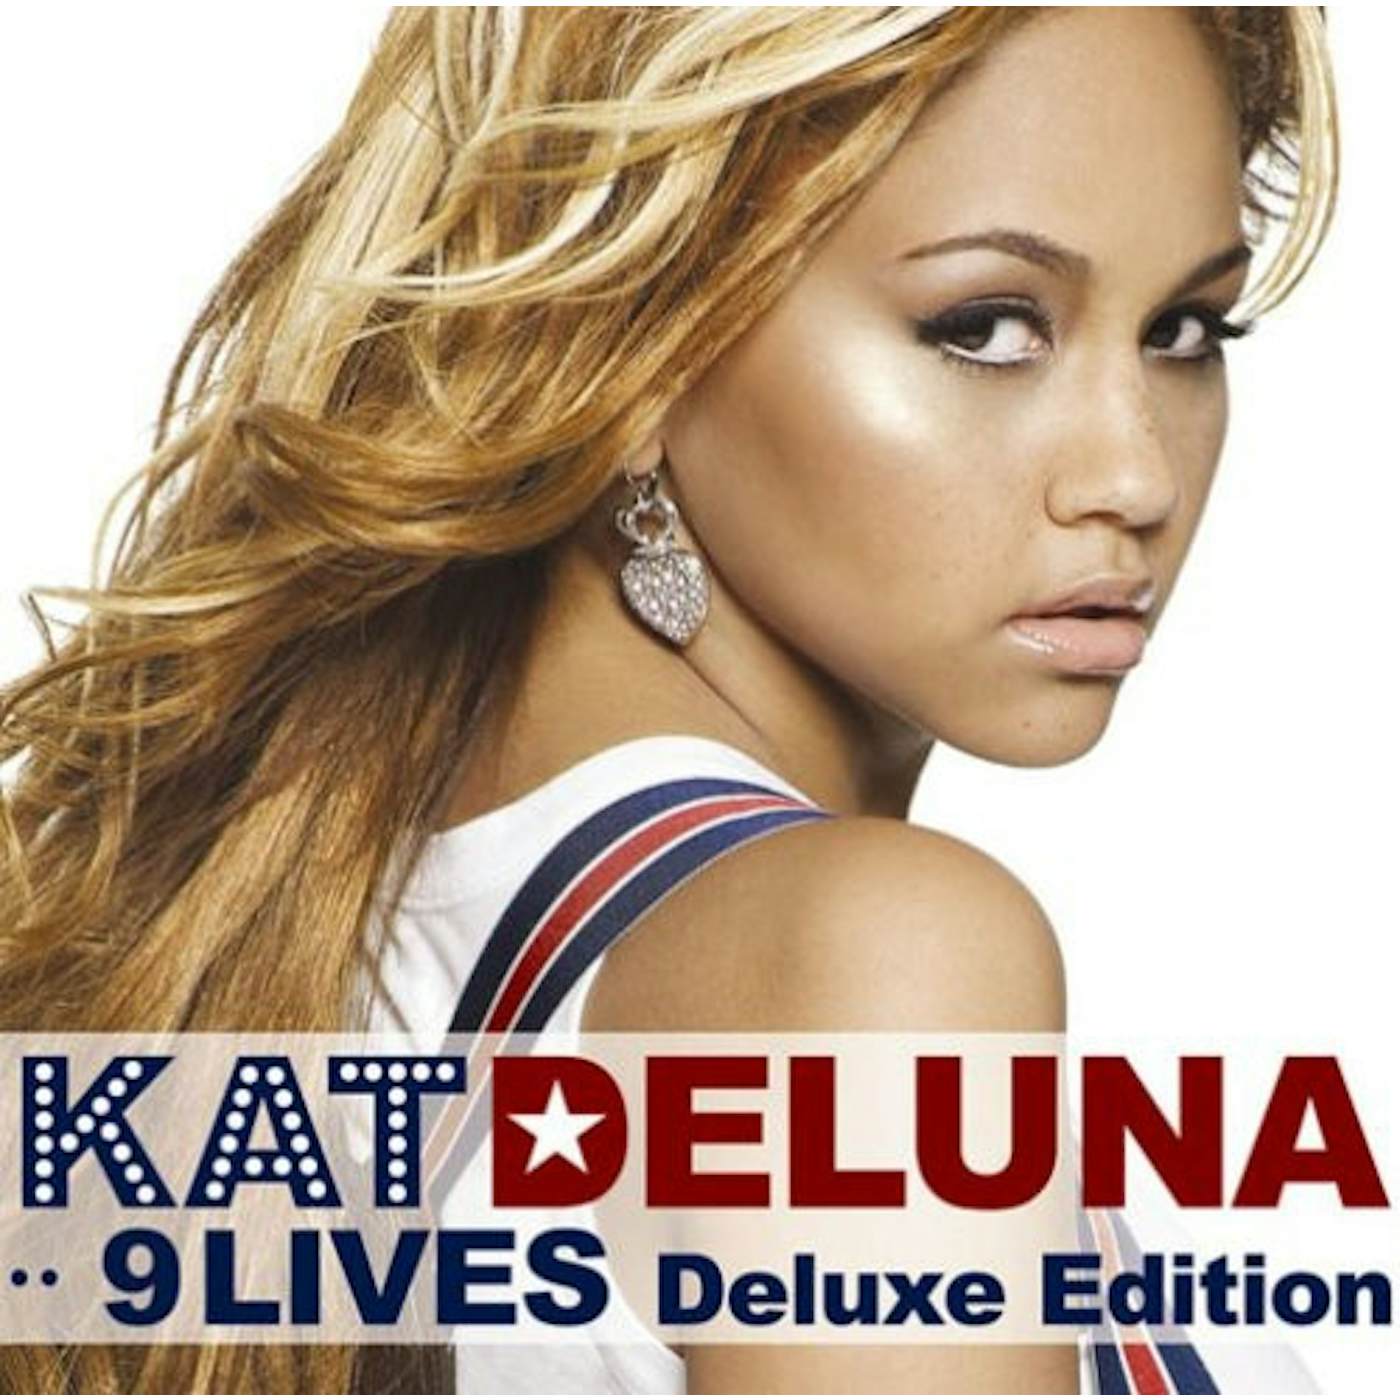 Kat Deluna 9 LIVES DELUXE EDITION CD